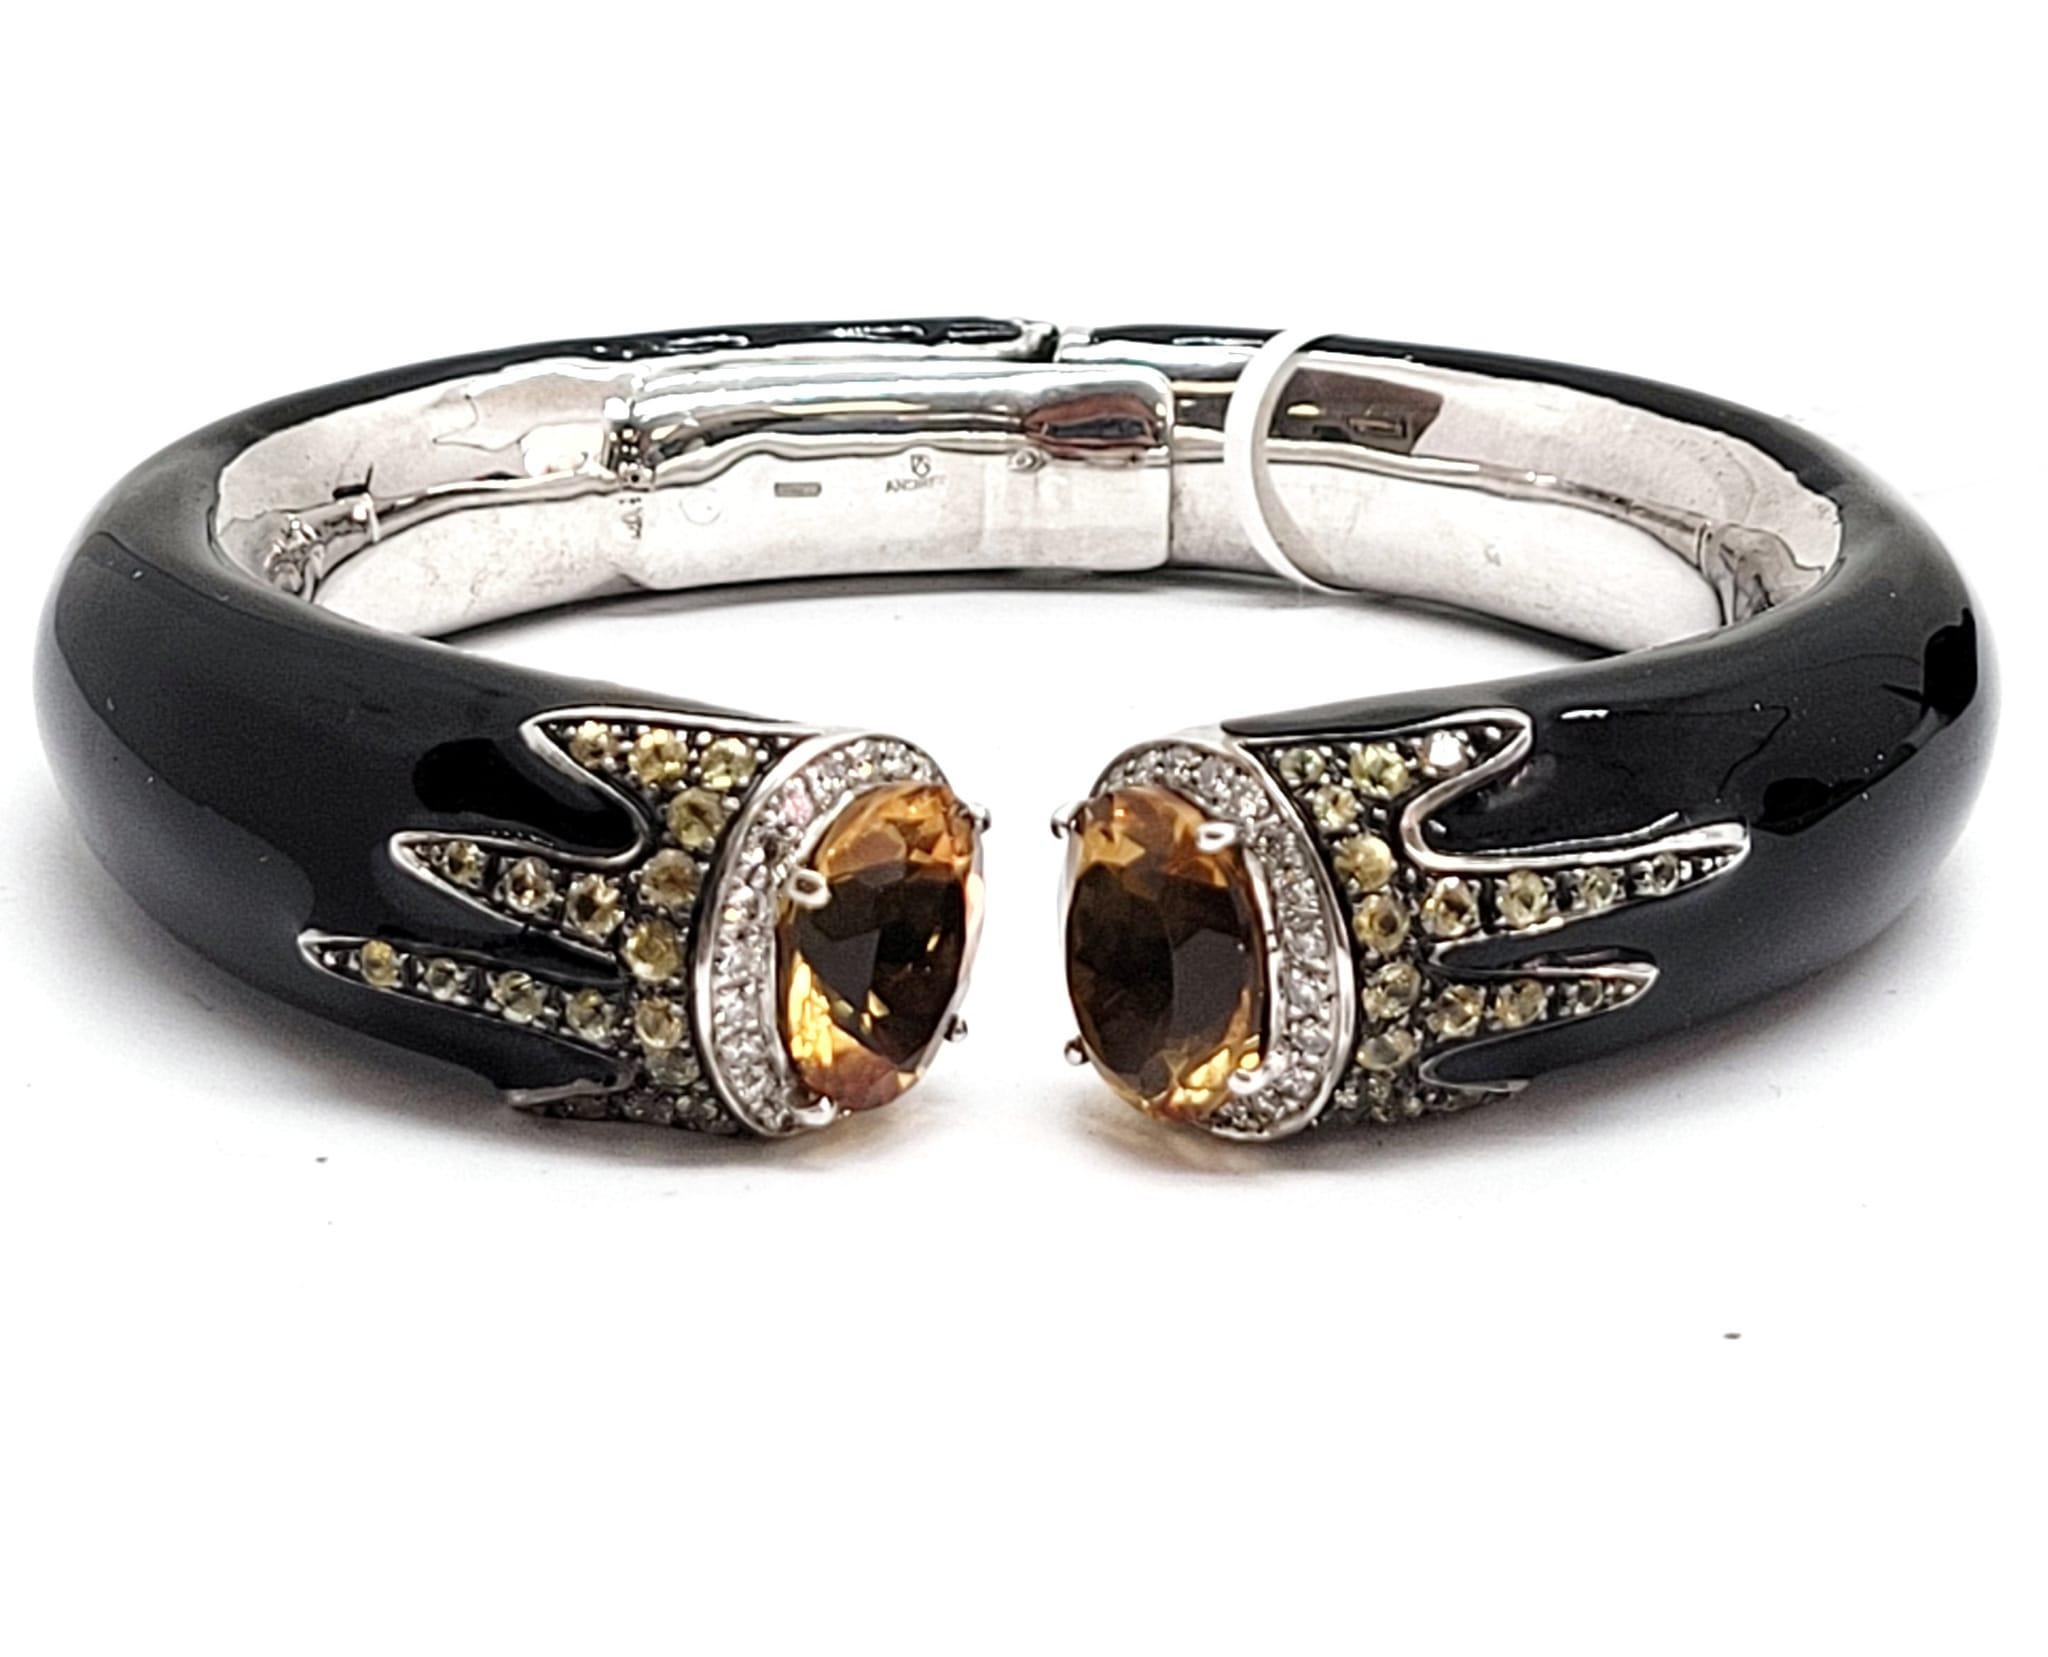 Andreoli Diamond Citrine Sapphire Black Enamel 18 Karat Gold and Silver Bracelet

This bracelet features:
- 0.56 Carat Diamond
- 8.68 Carat Citrine
- 1.33 Carat Yellow Sapphire
- Black Enamel
- 18K Gold & Silver
- Made In Italy